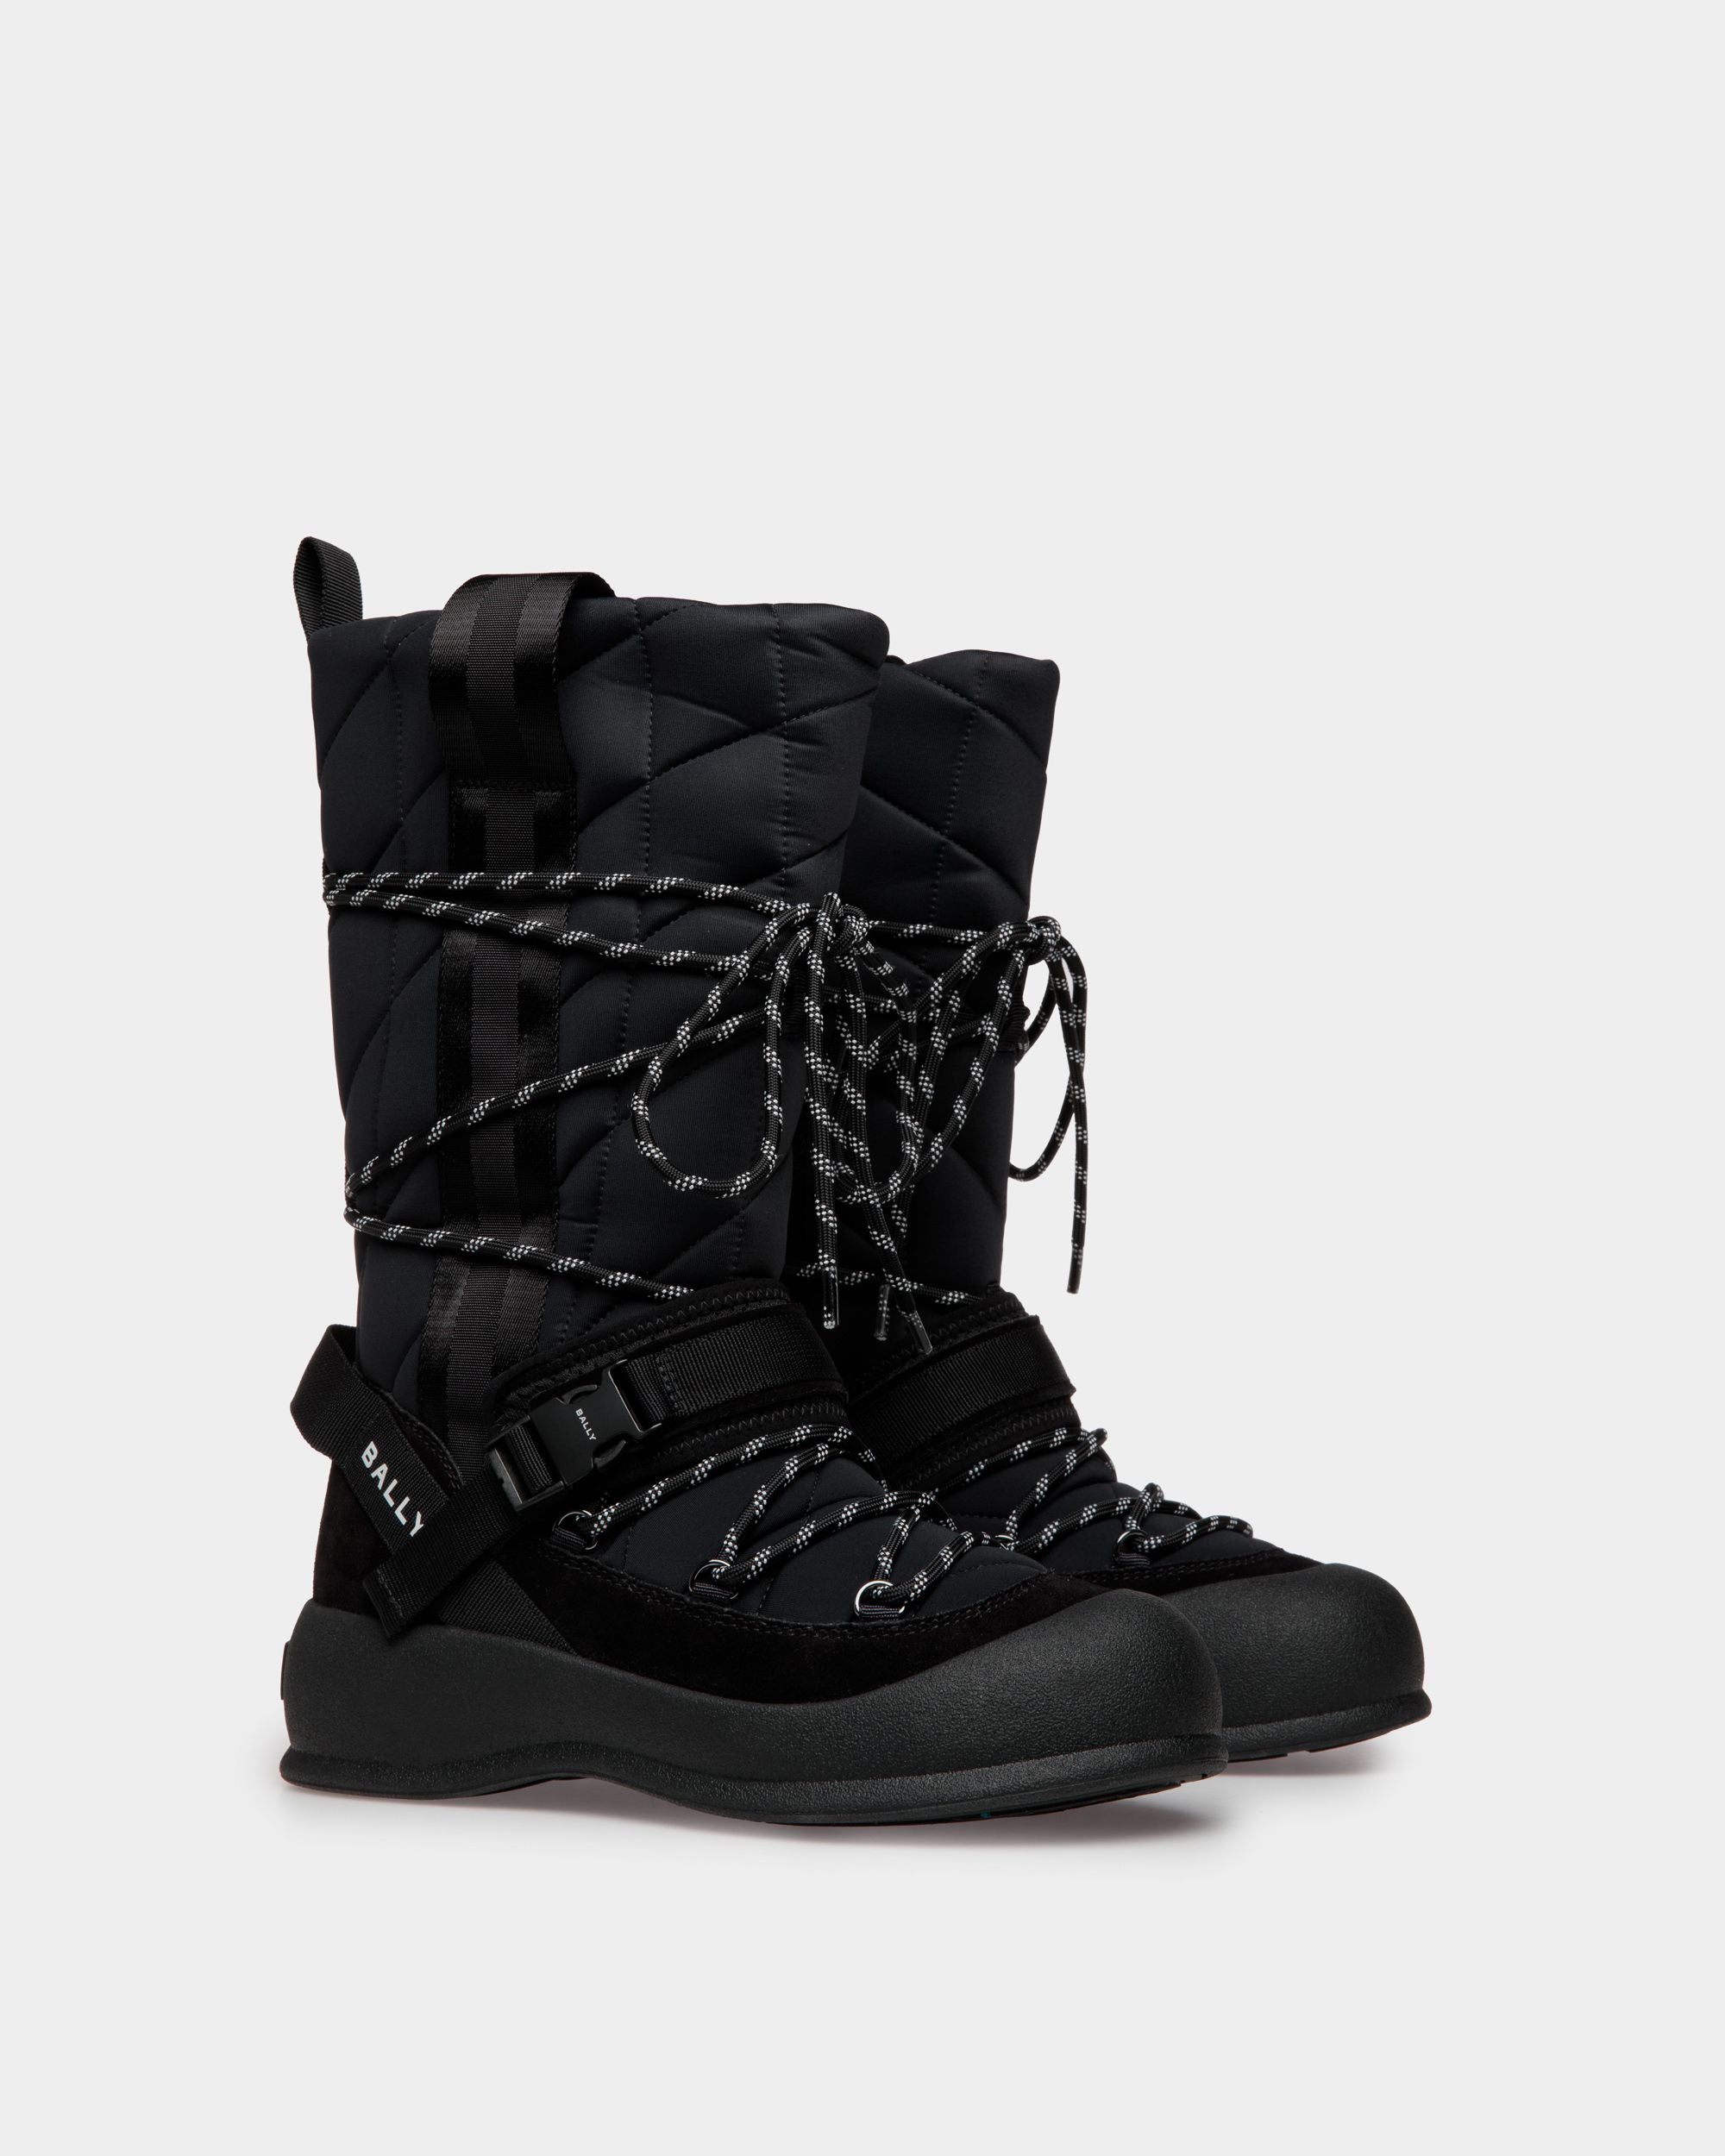 Frei | Women's Boot in Black Nylon | Bally | Still Life 3/4 Front